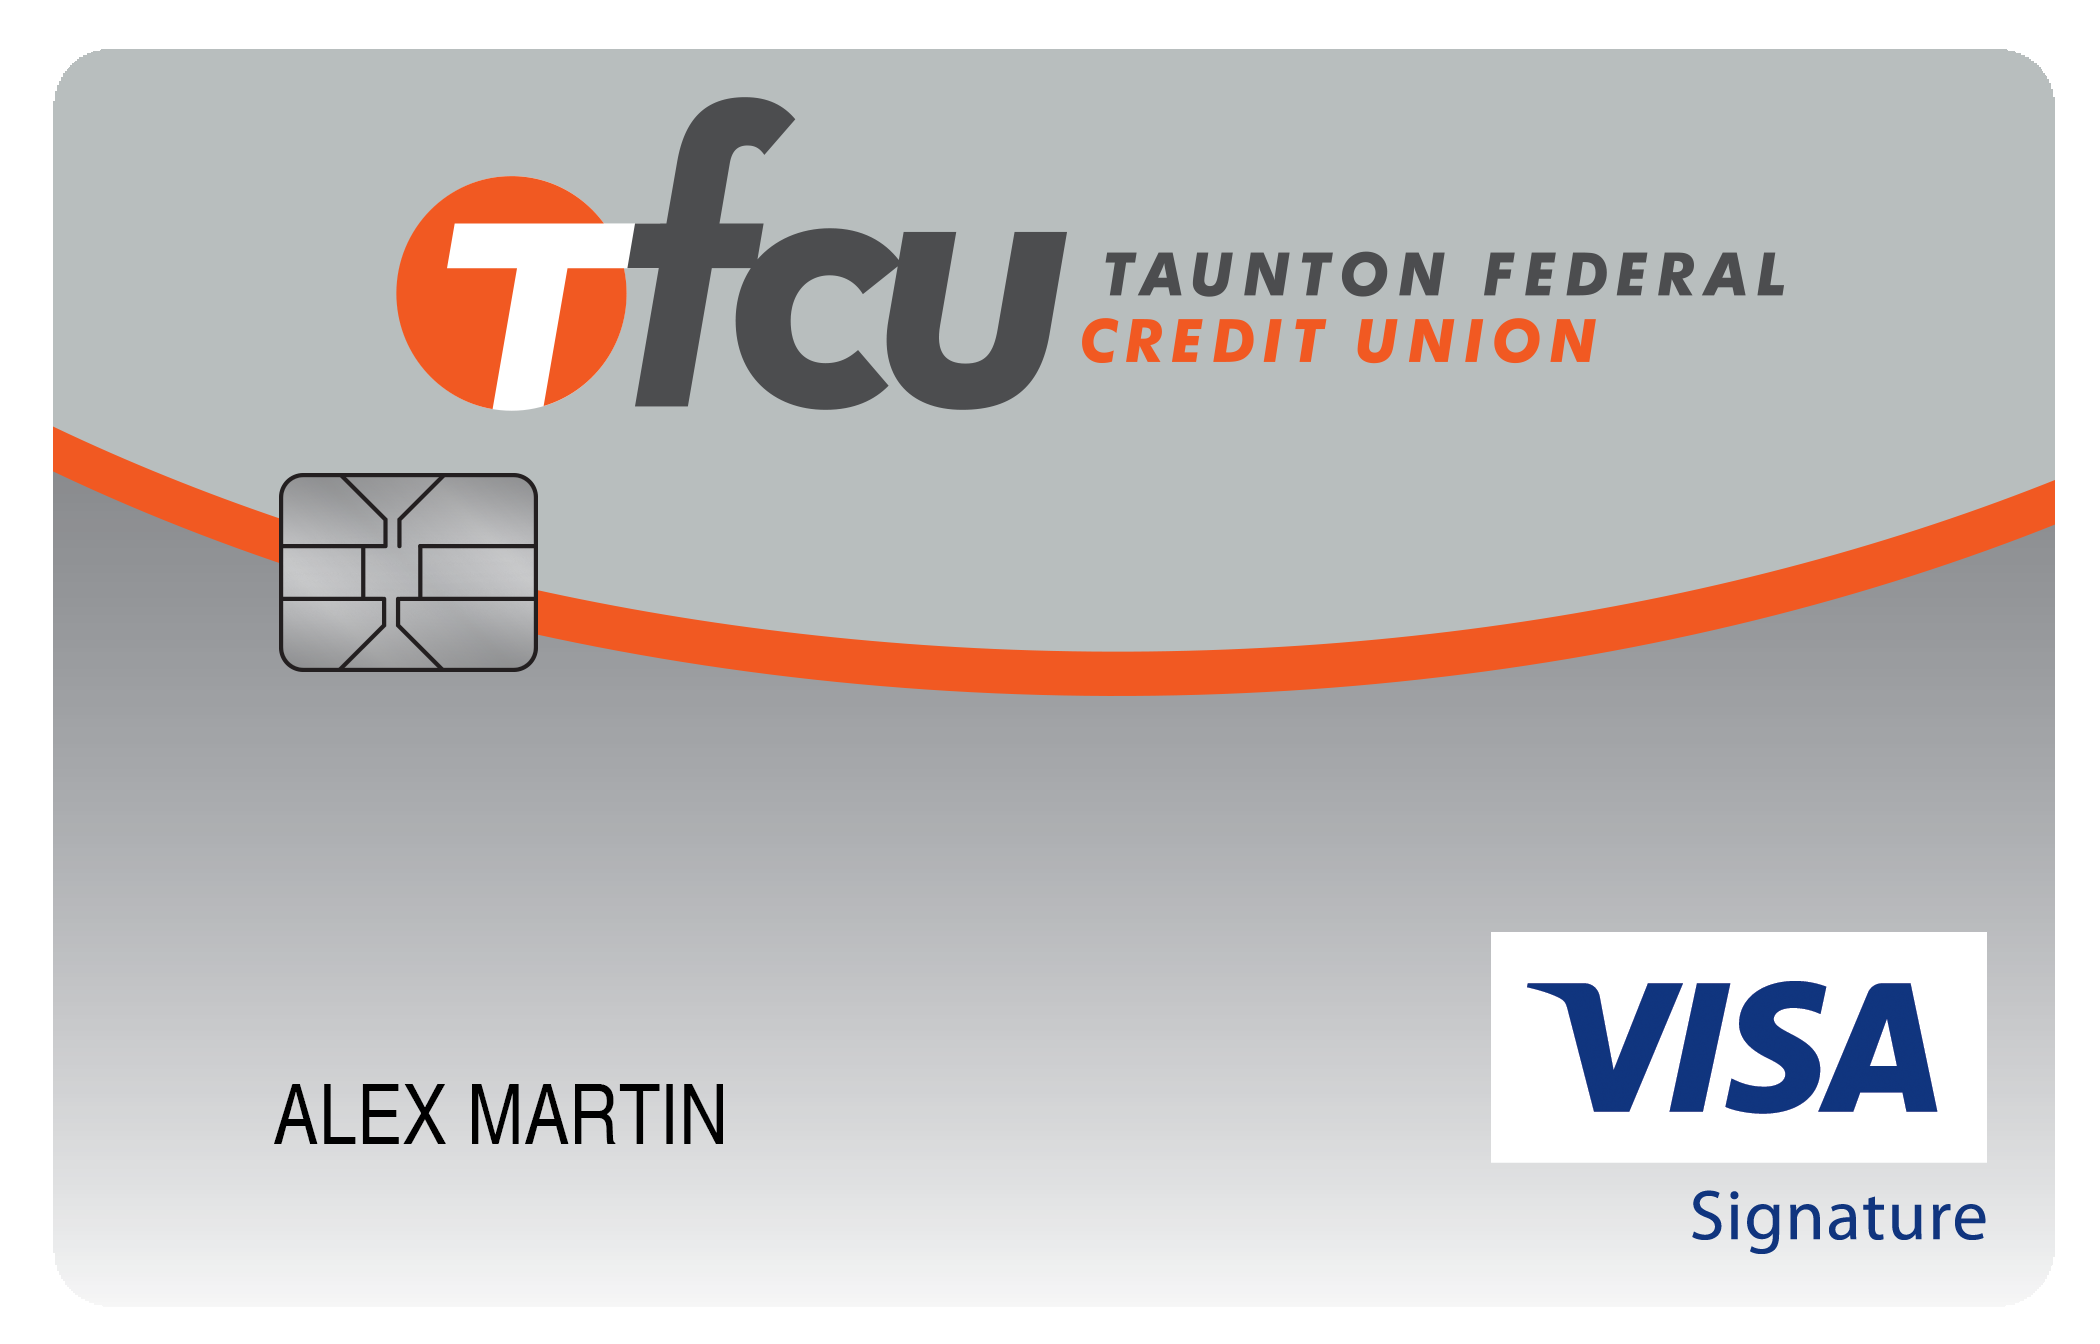 Taunton Federal Credit Union College Real Rewards Card